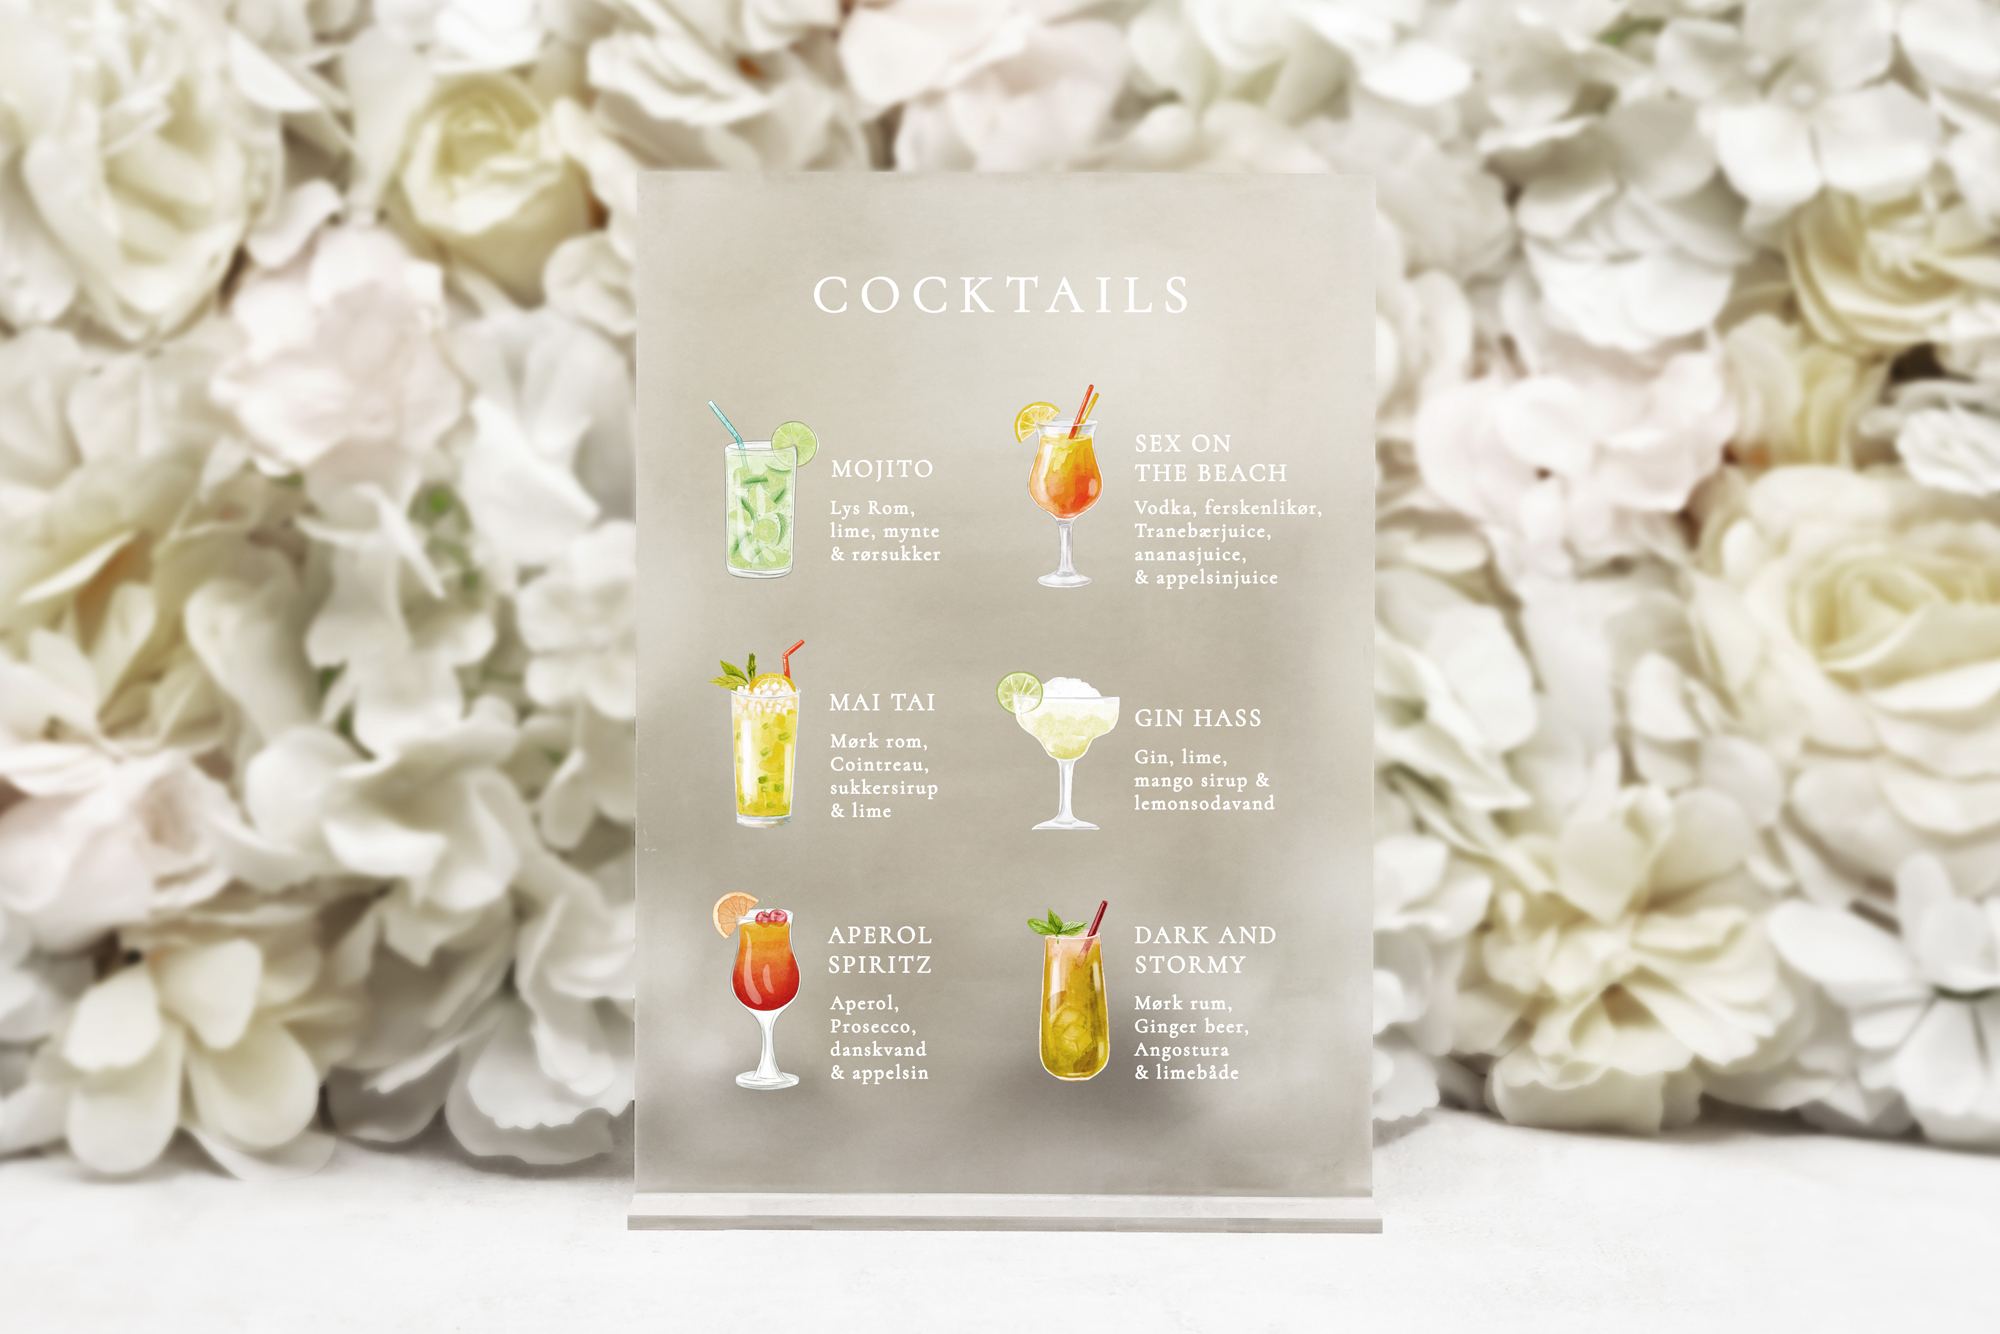 Regeringsforordning lærer Ny ankomst Cocktails skilt, Drinks › Drinksskilte › Drinksskilte i akryl · LUMEN